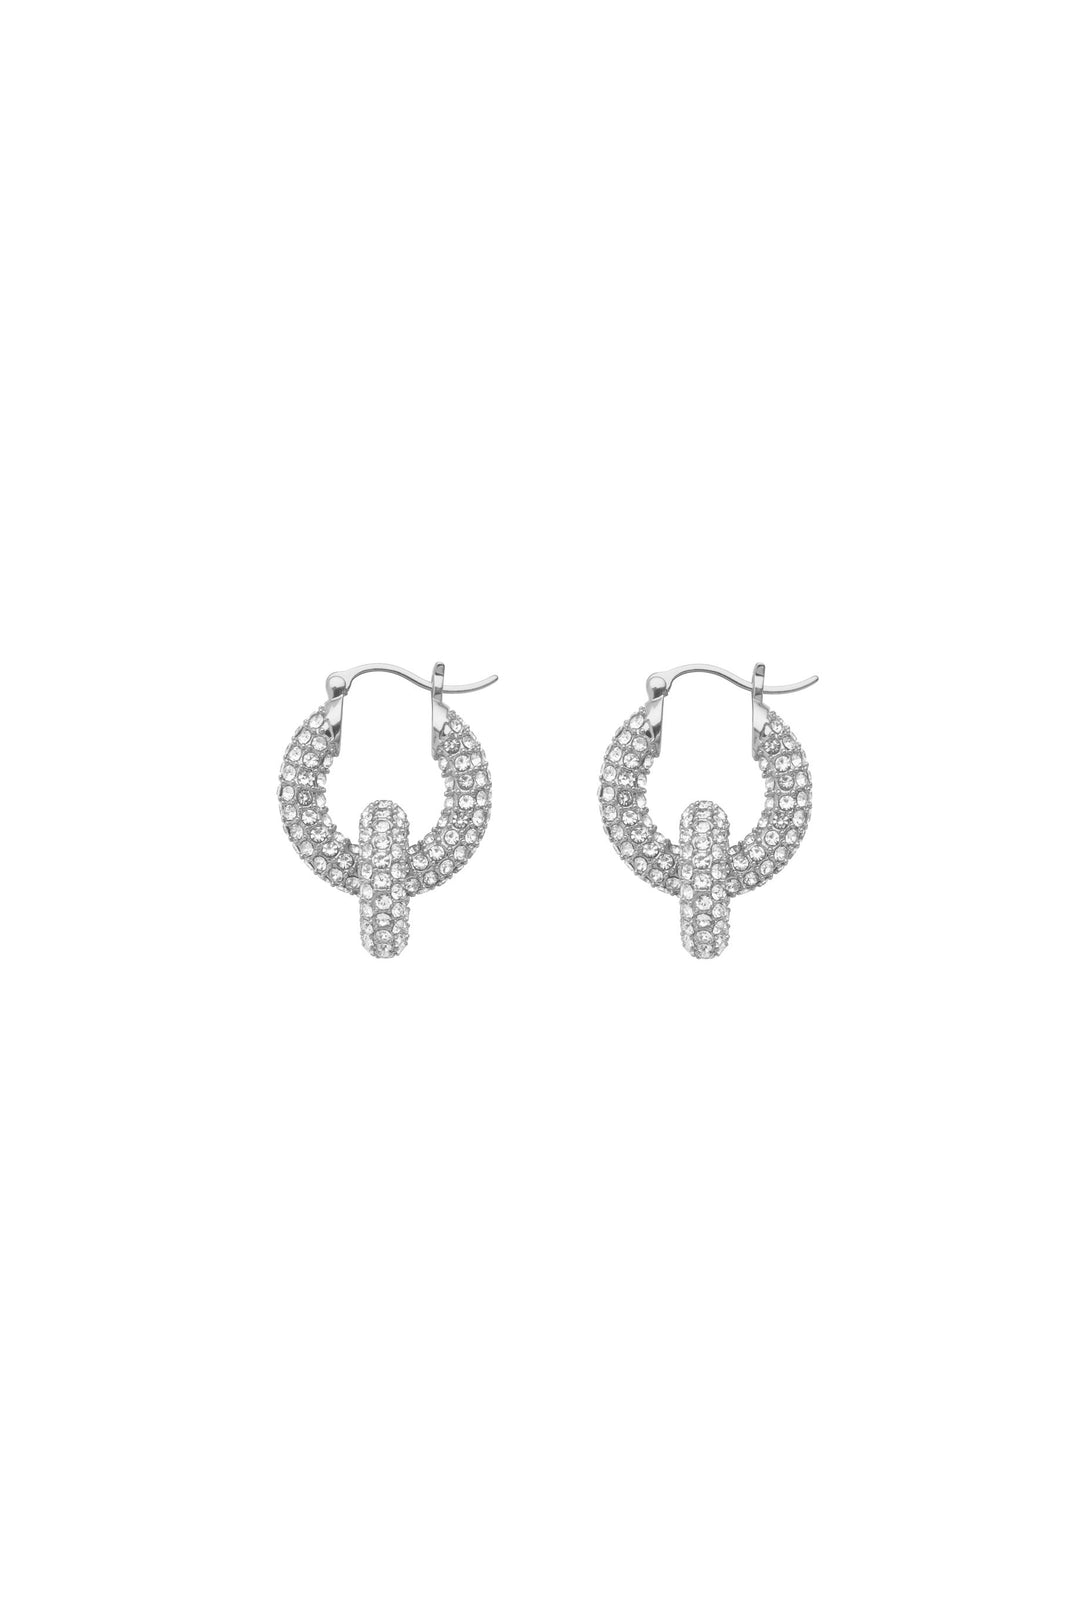 Amber Sceats Melina Earrings - Silver